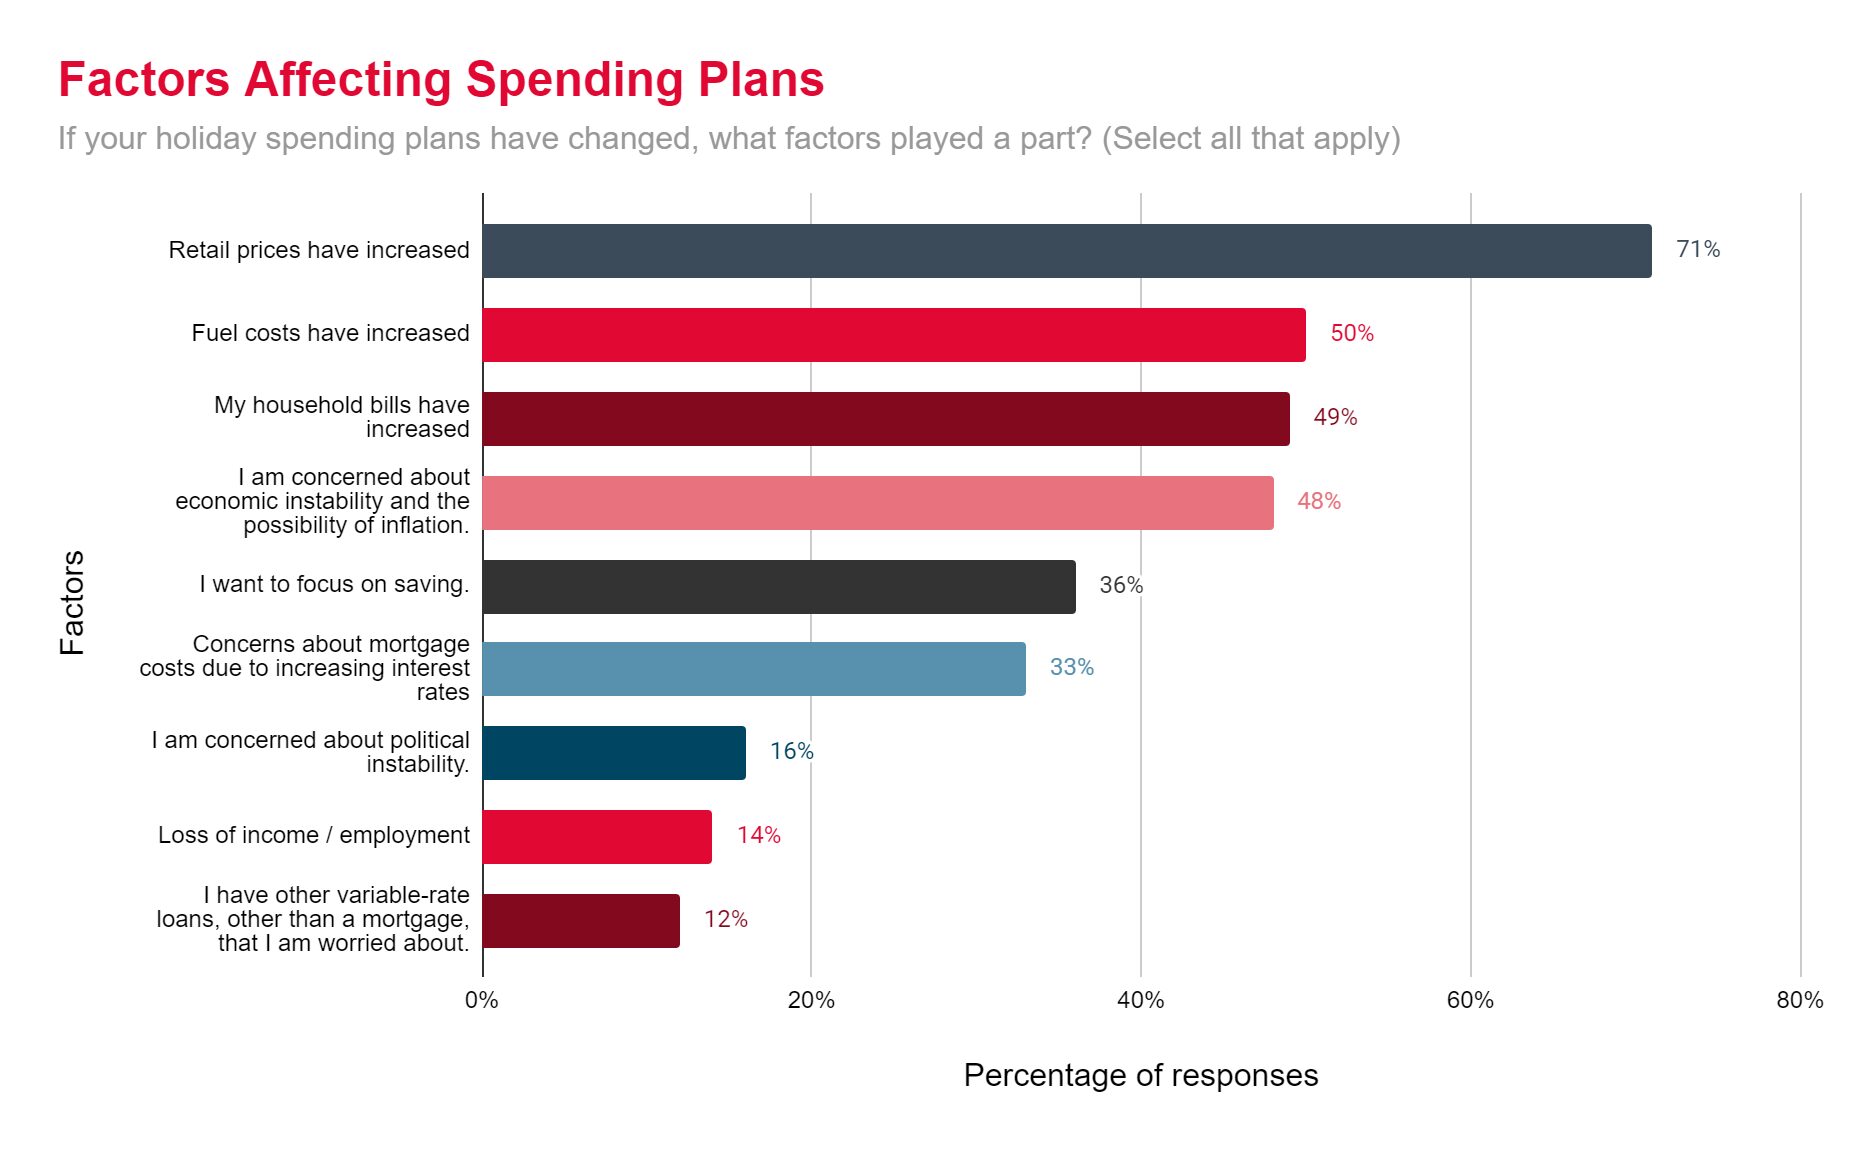 Factors affecting spending plans